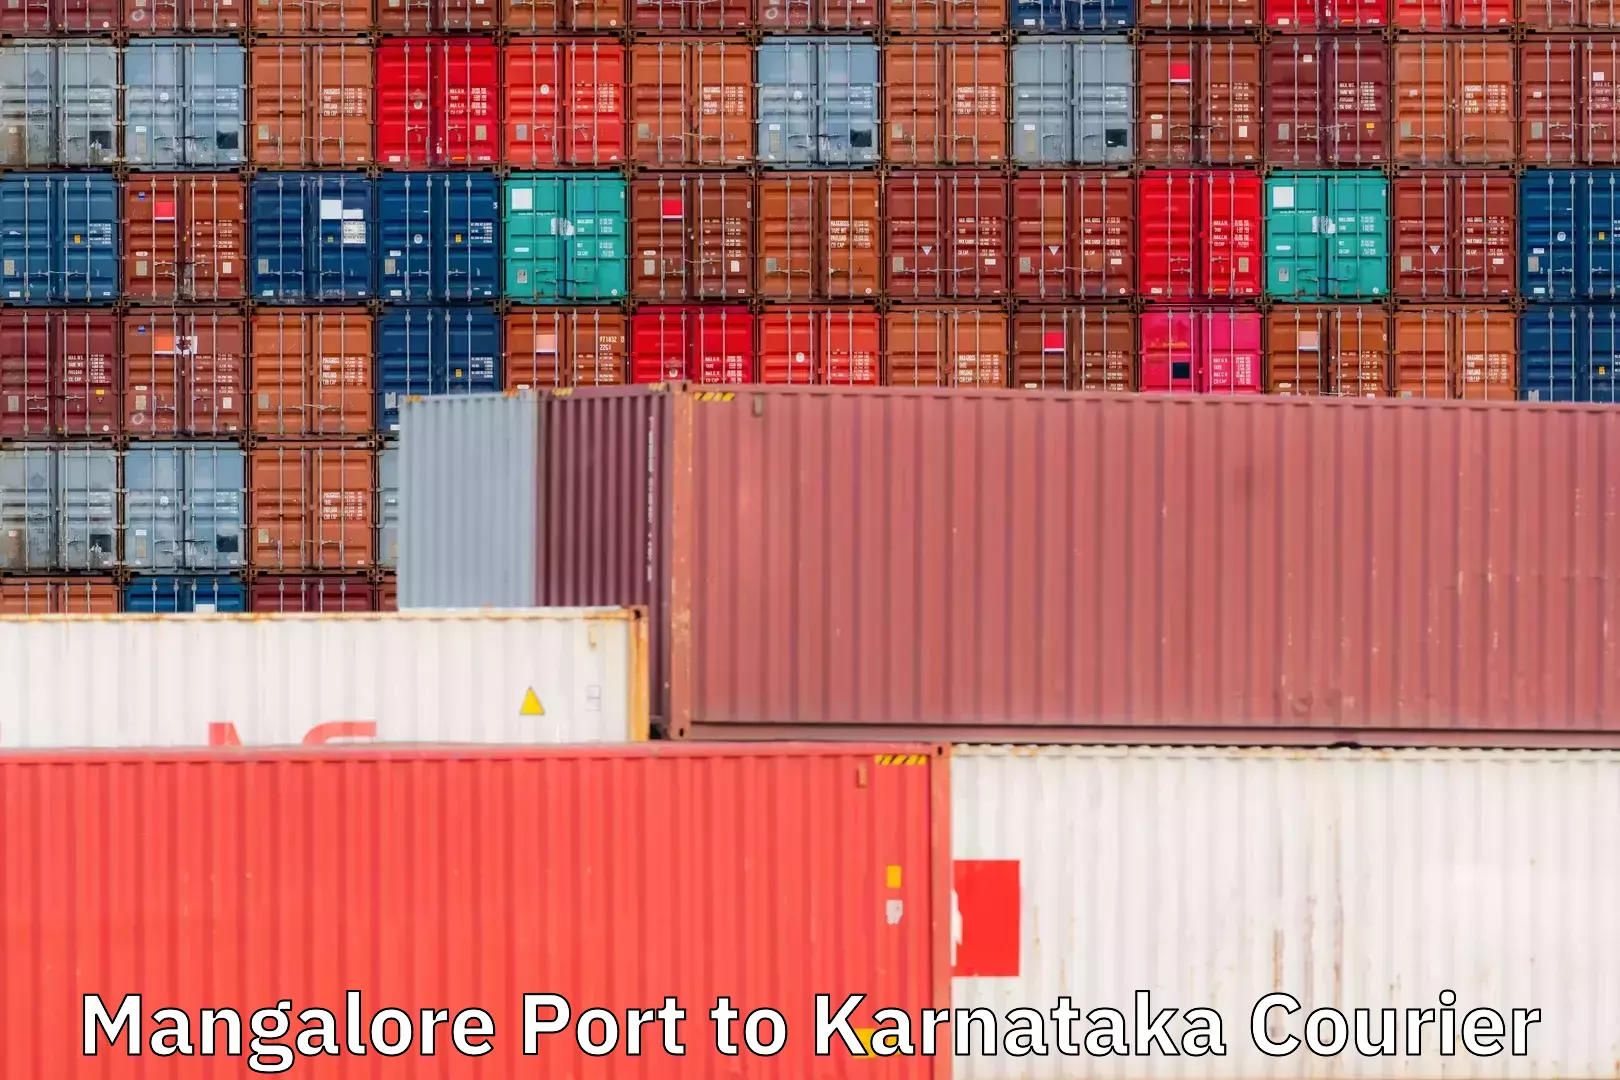 Reliable logistics providers Mangalore Port to Karnataka